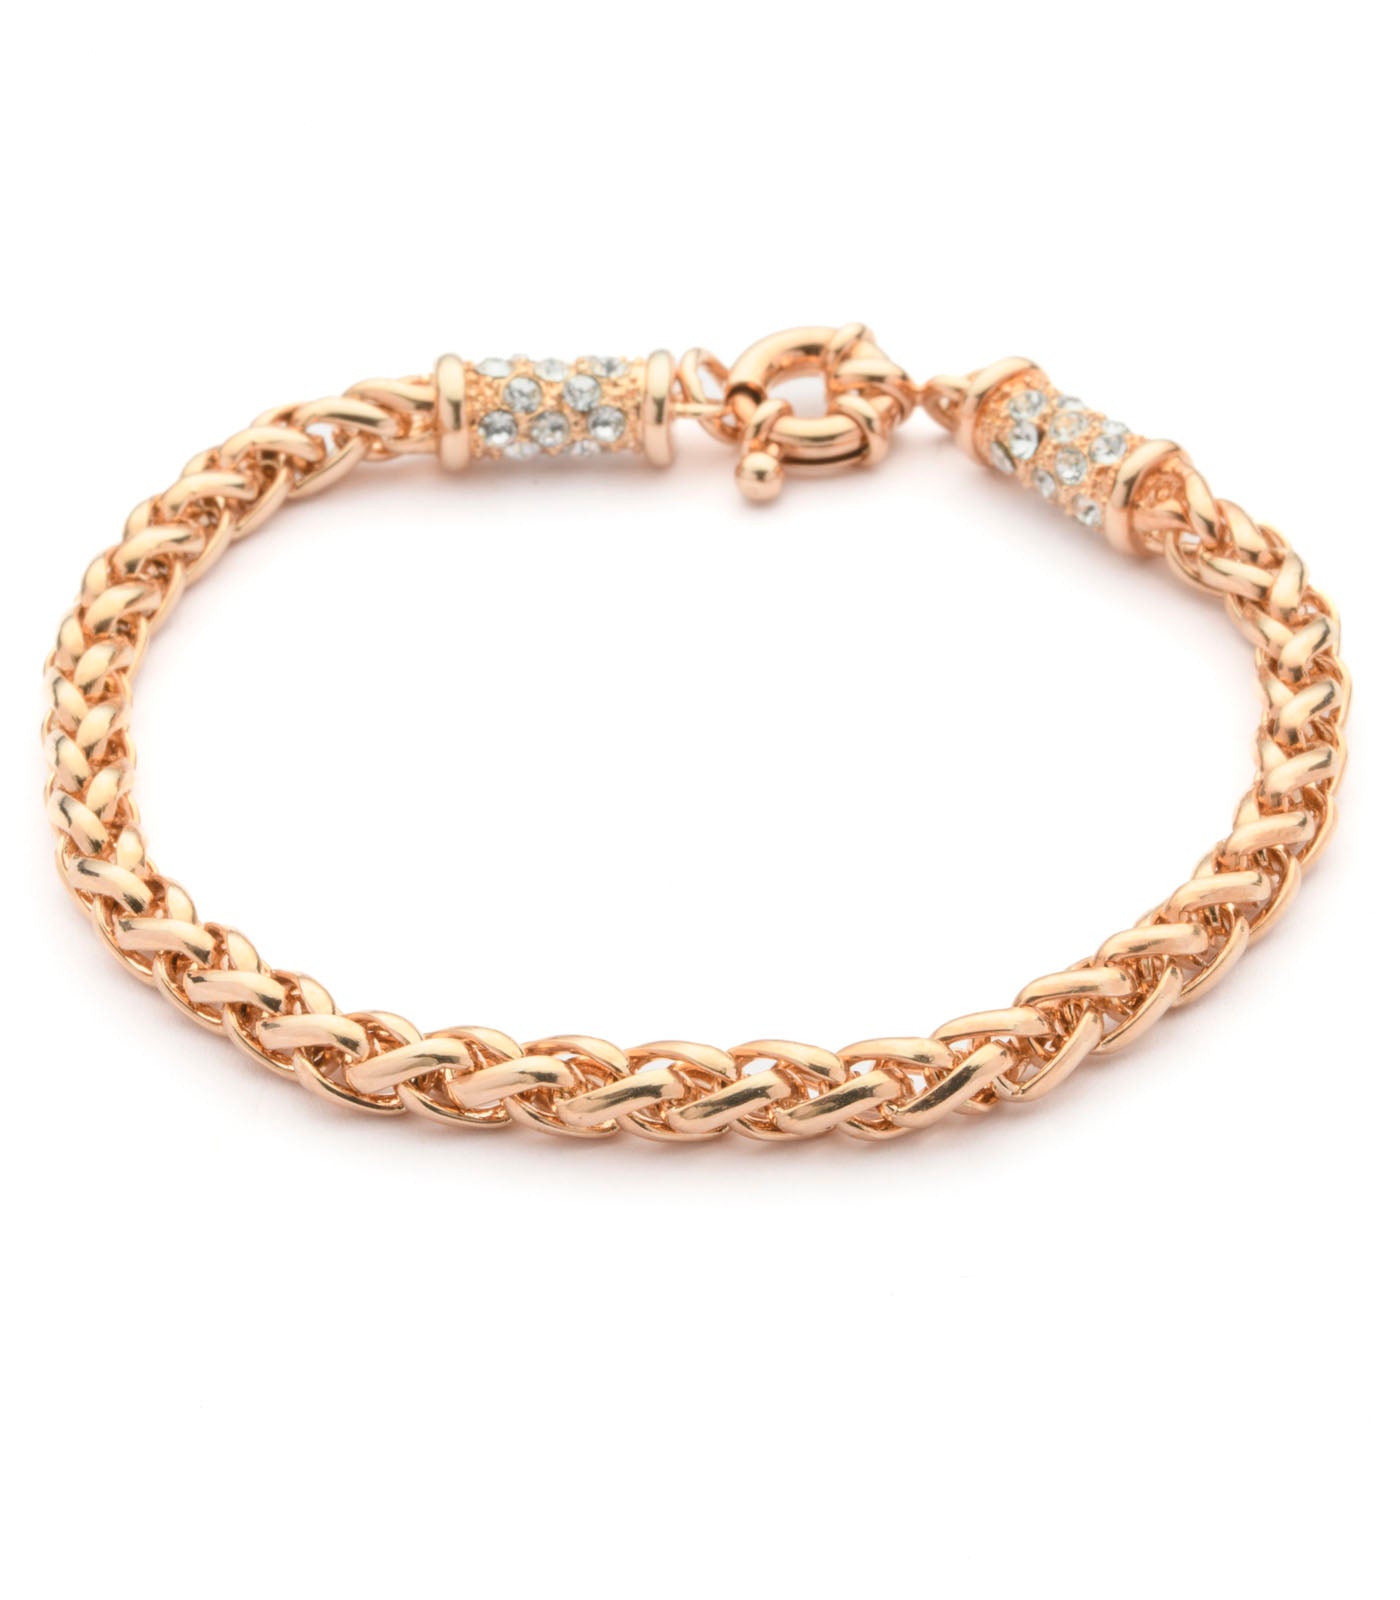 Stylish Golden Loops Bracelet (Brass)